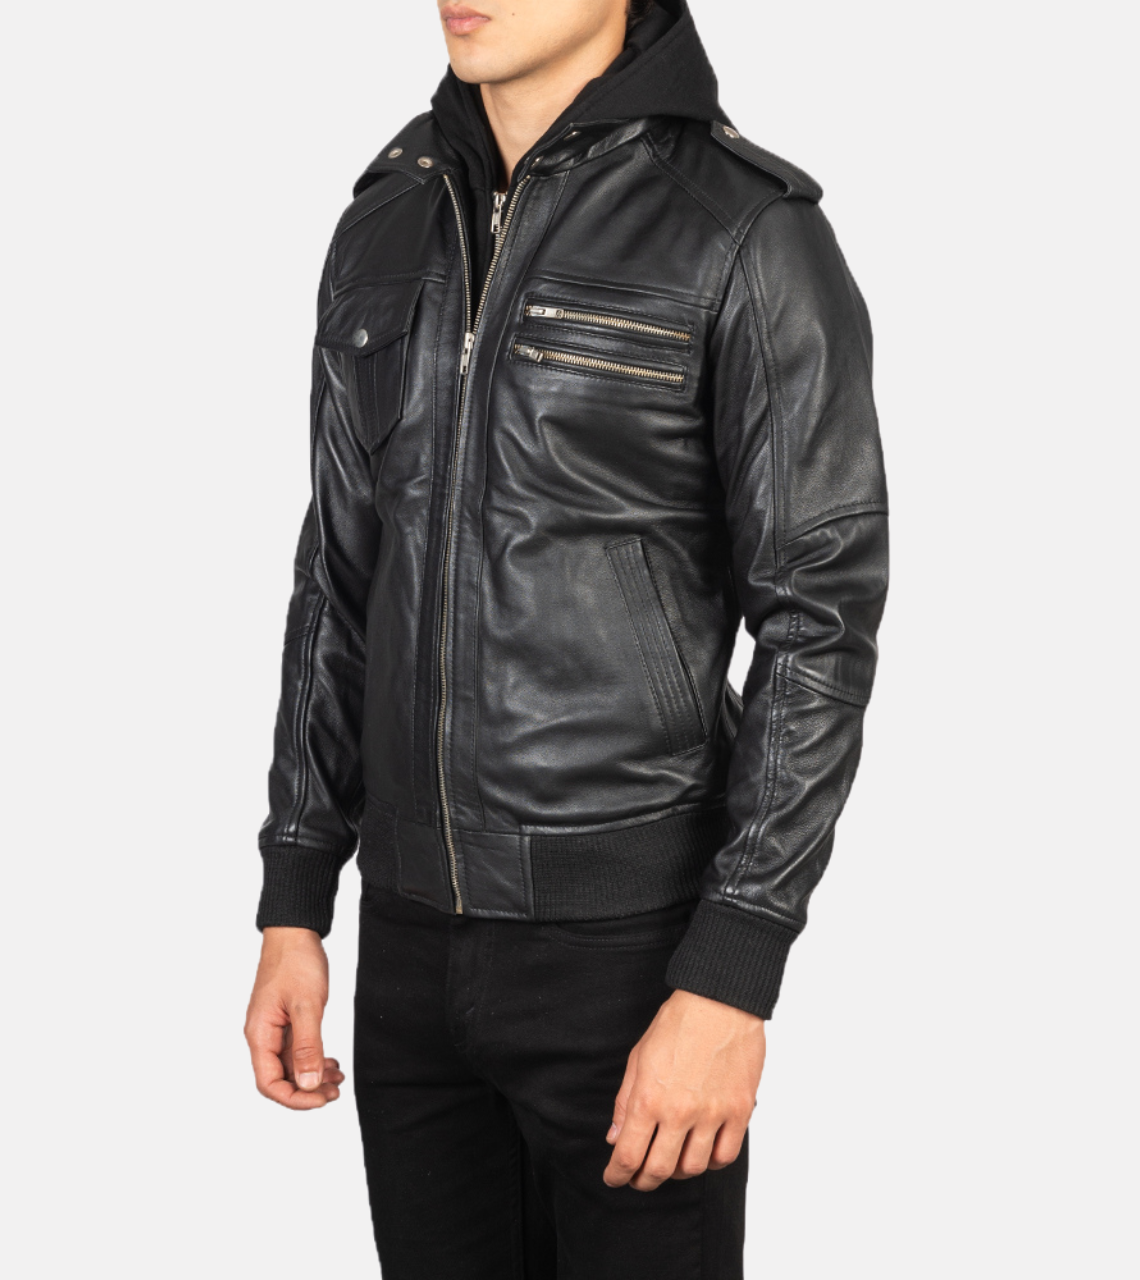  Men's Leather Bomber Jacket